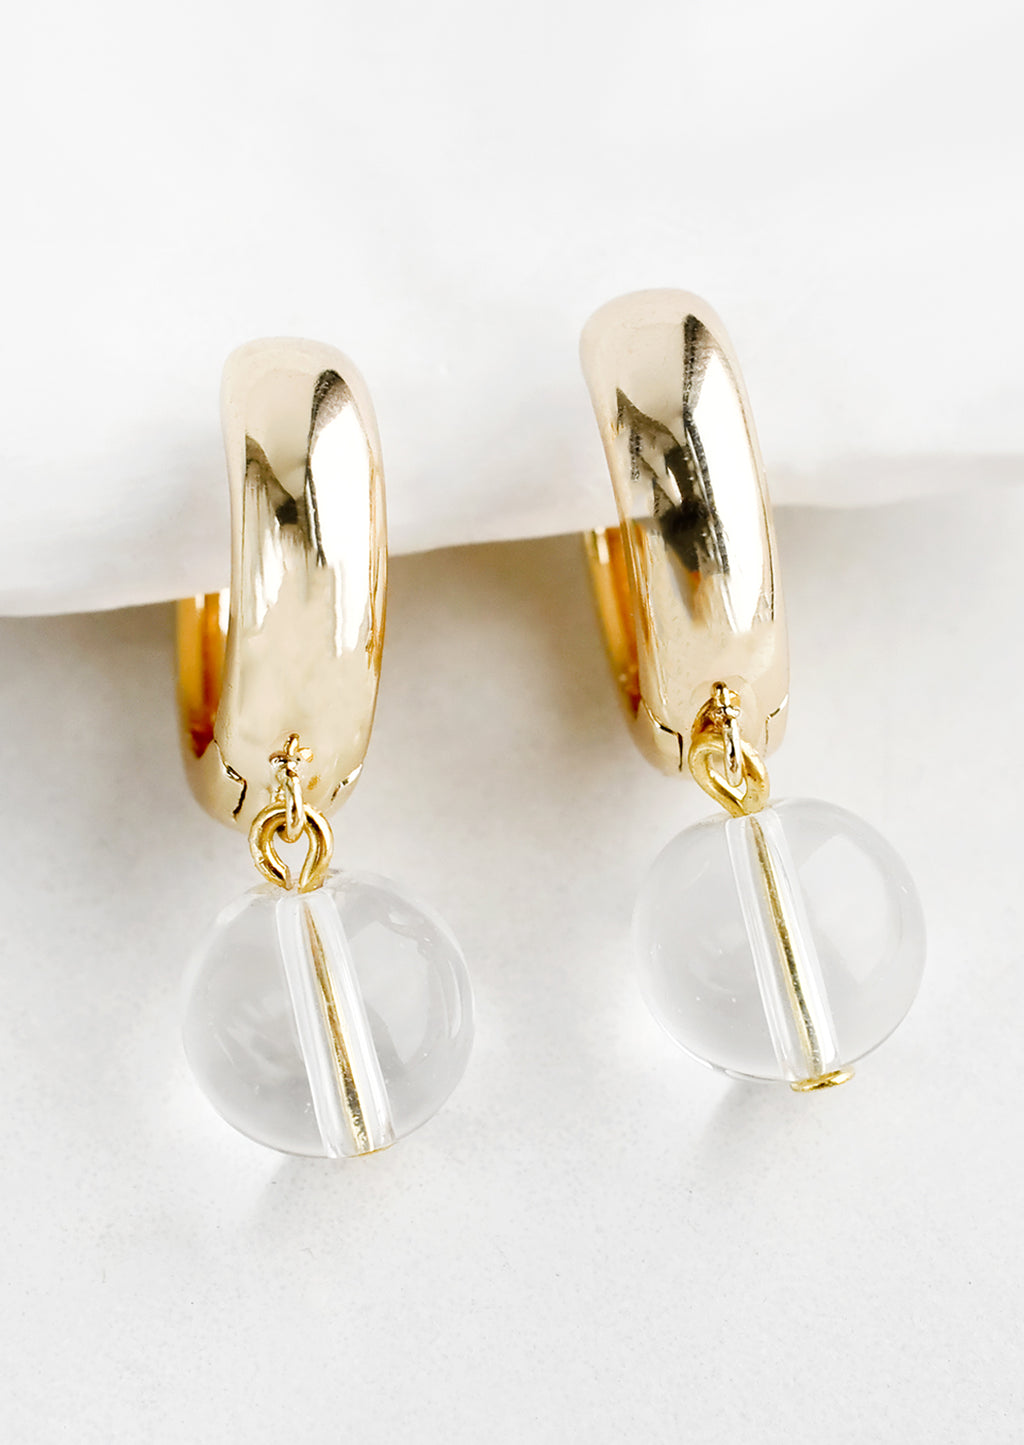 Clear: A pair of gold huggie hoop earrings with single spherical clear bead detail.